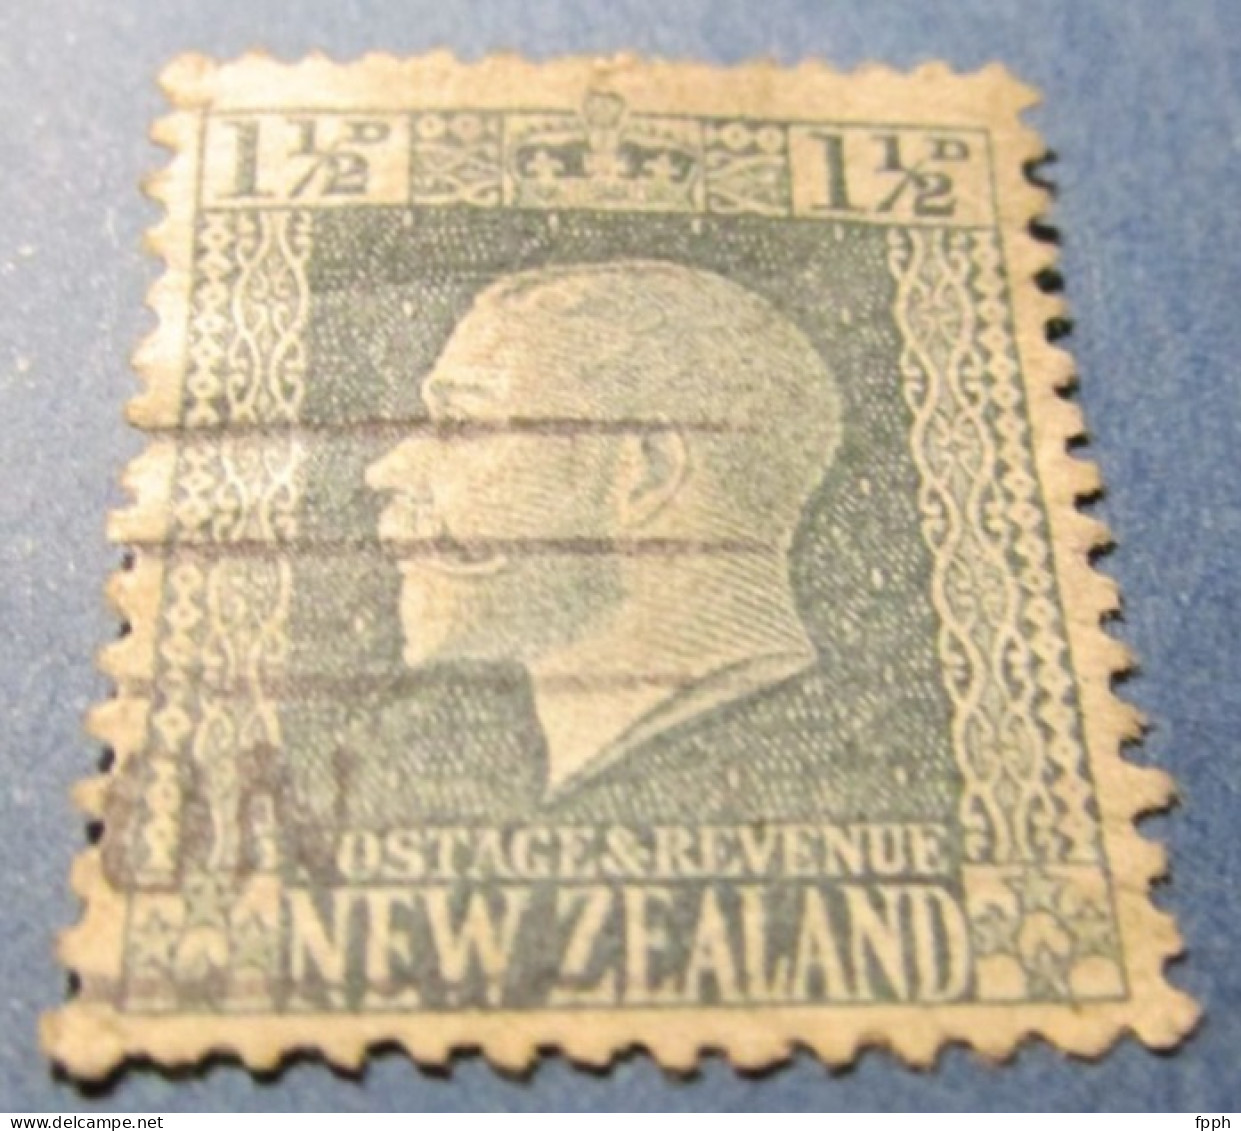 Timbre De Nouvelle Zélande - New Zealand - Georges V - Gebruikt